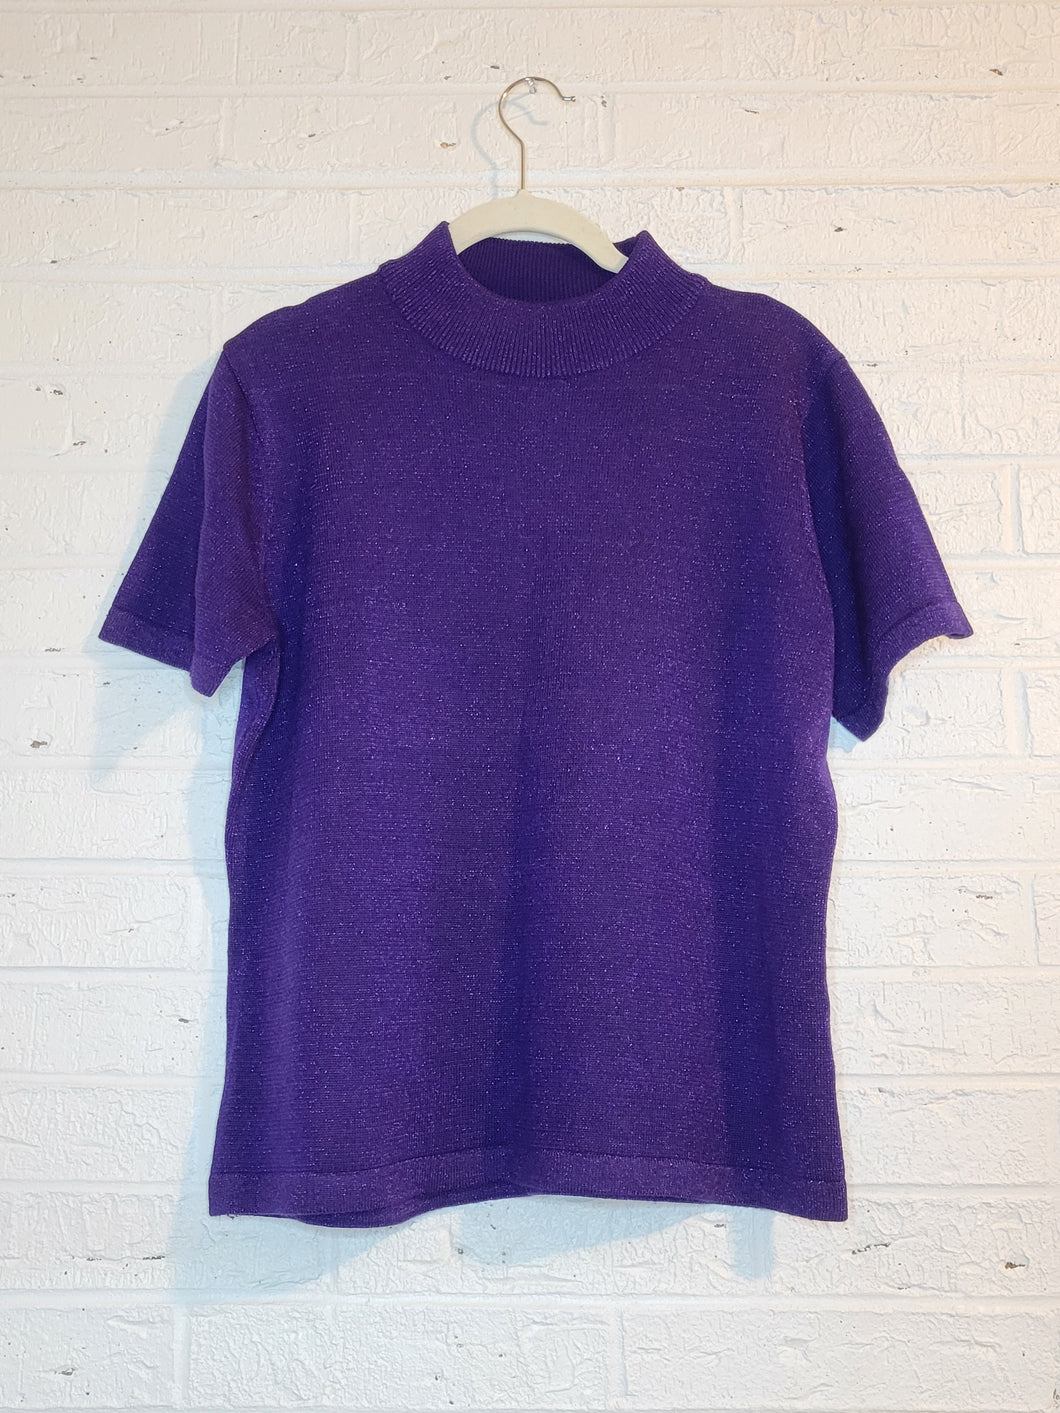 M - Royal purple sweater top